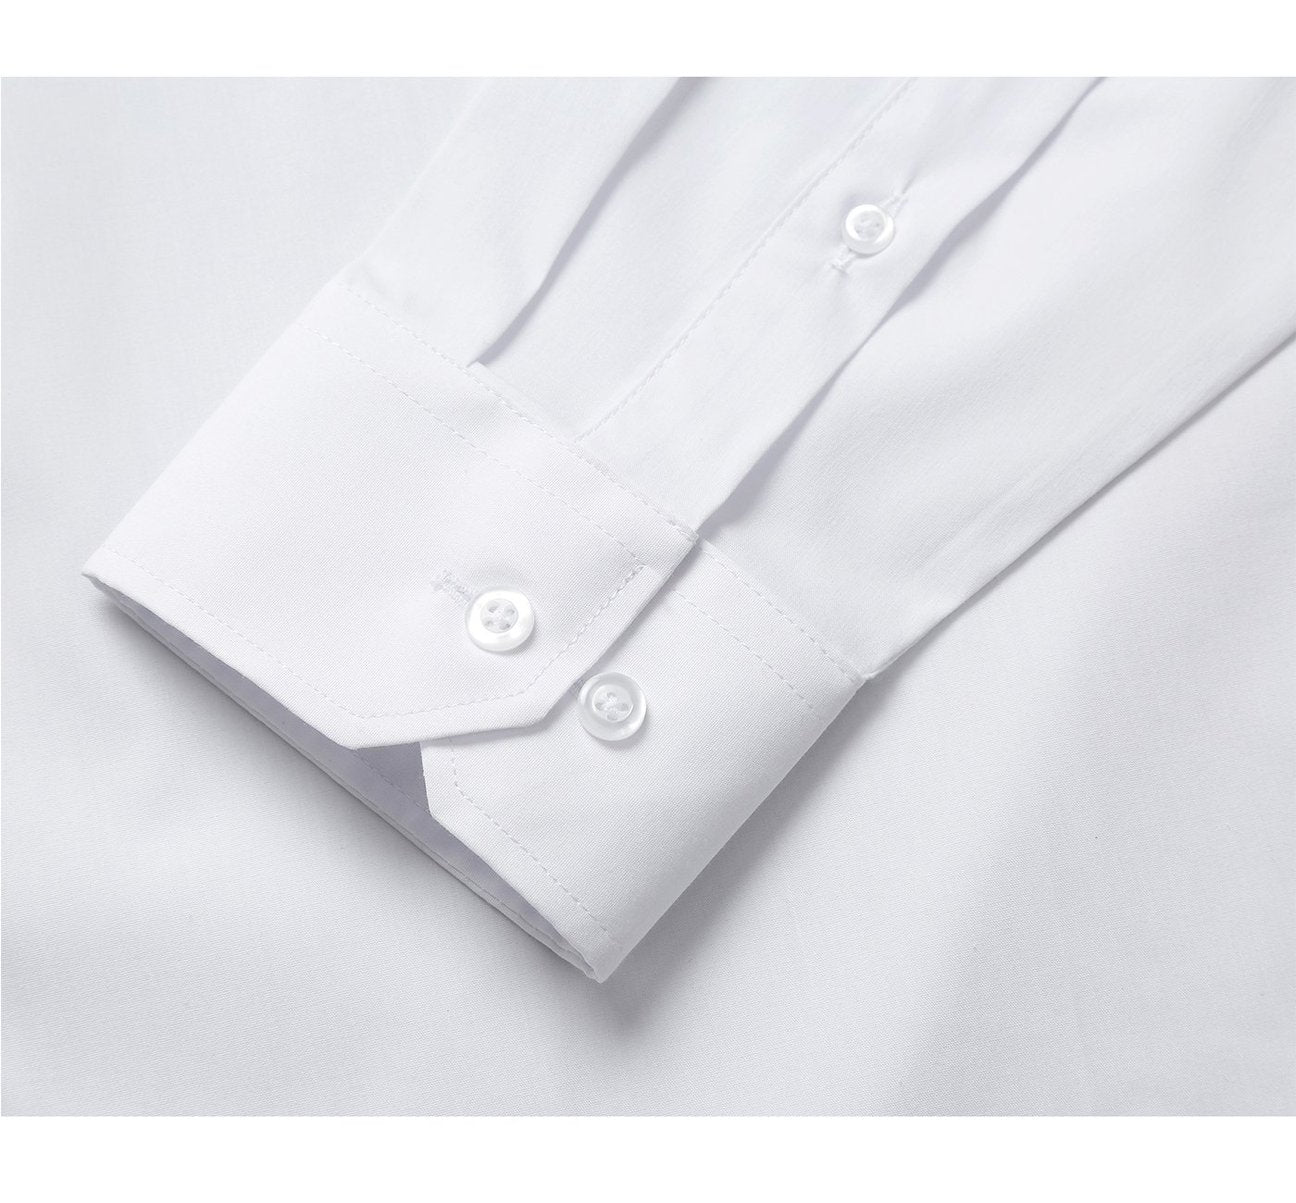 RENOIR White Classic/Regular Fit Long Sleeve Spread Collar Dress Shirt TC01